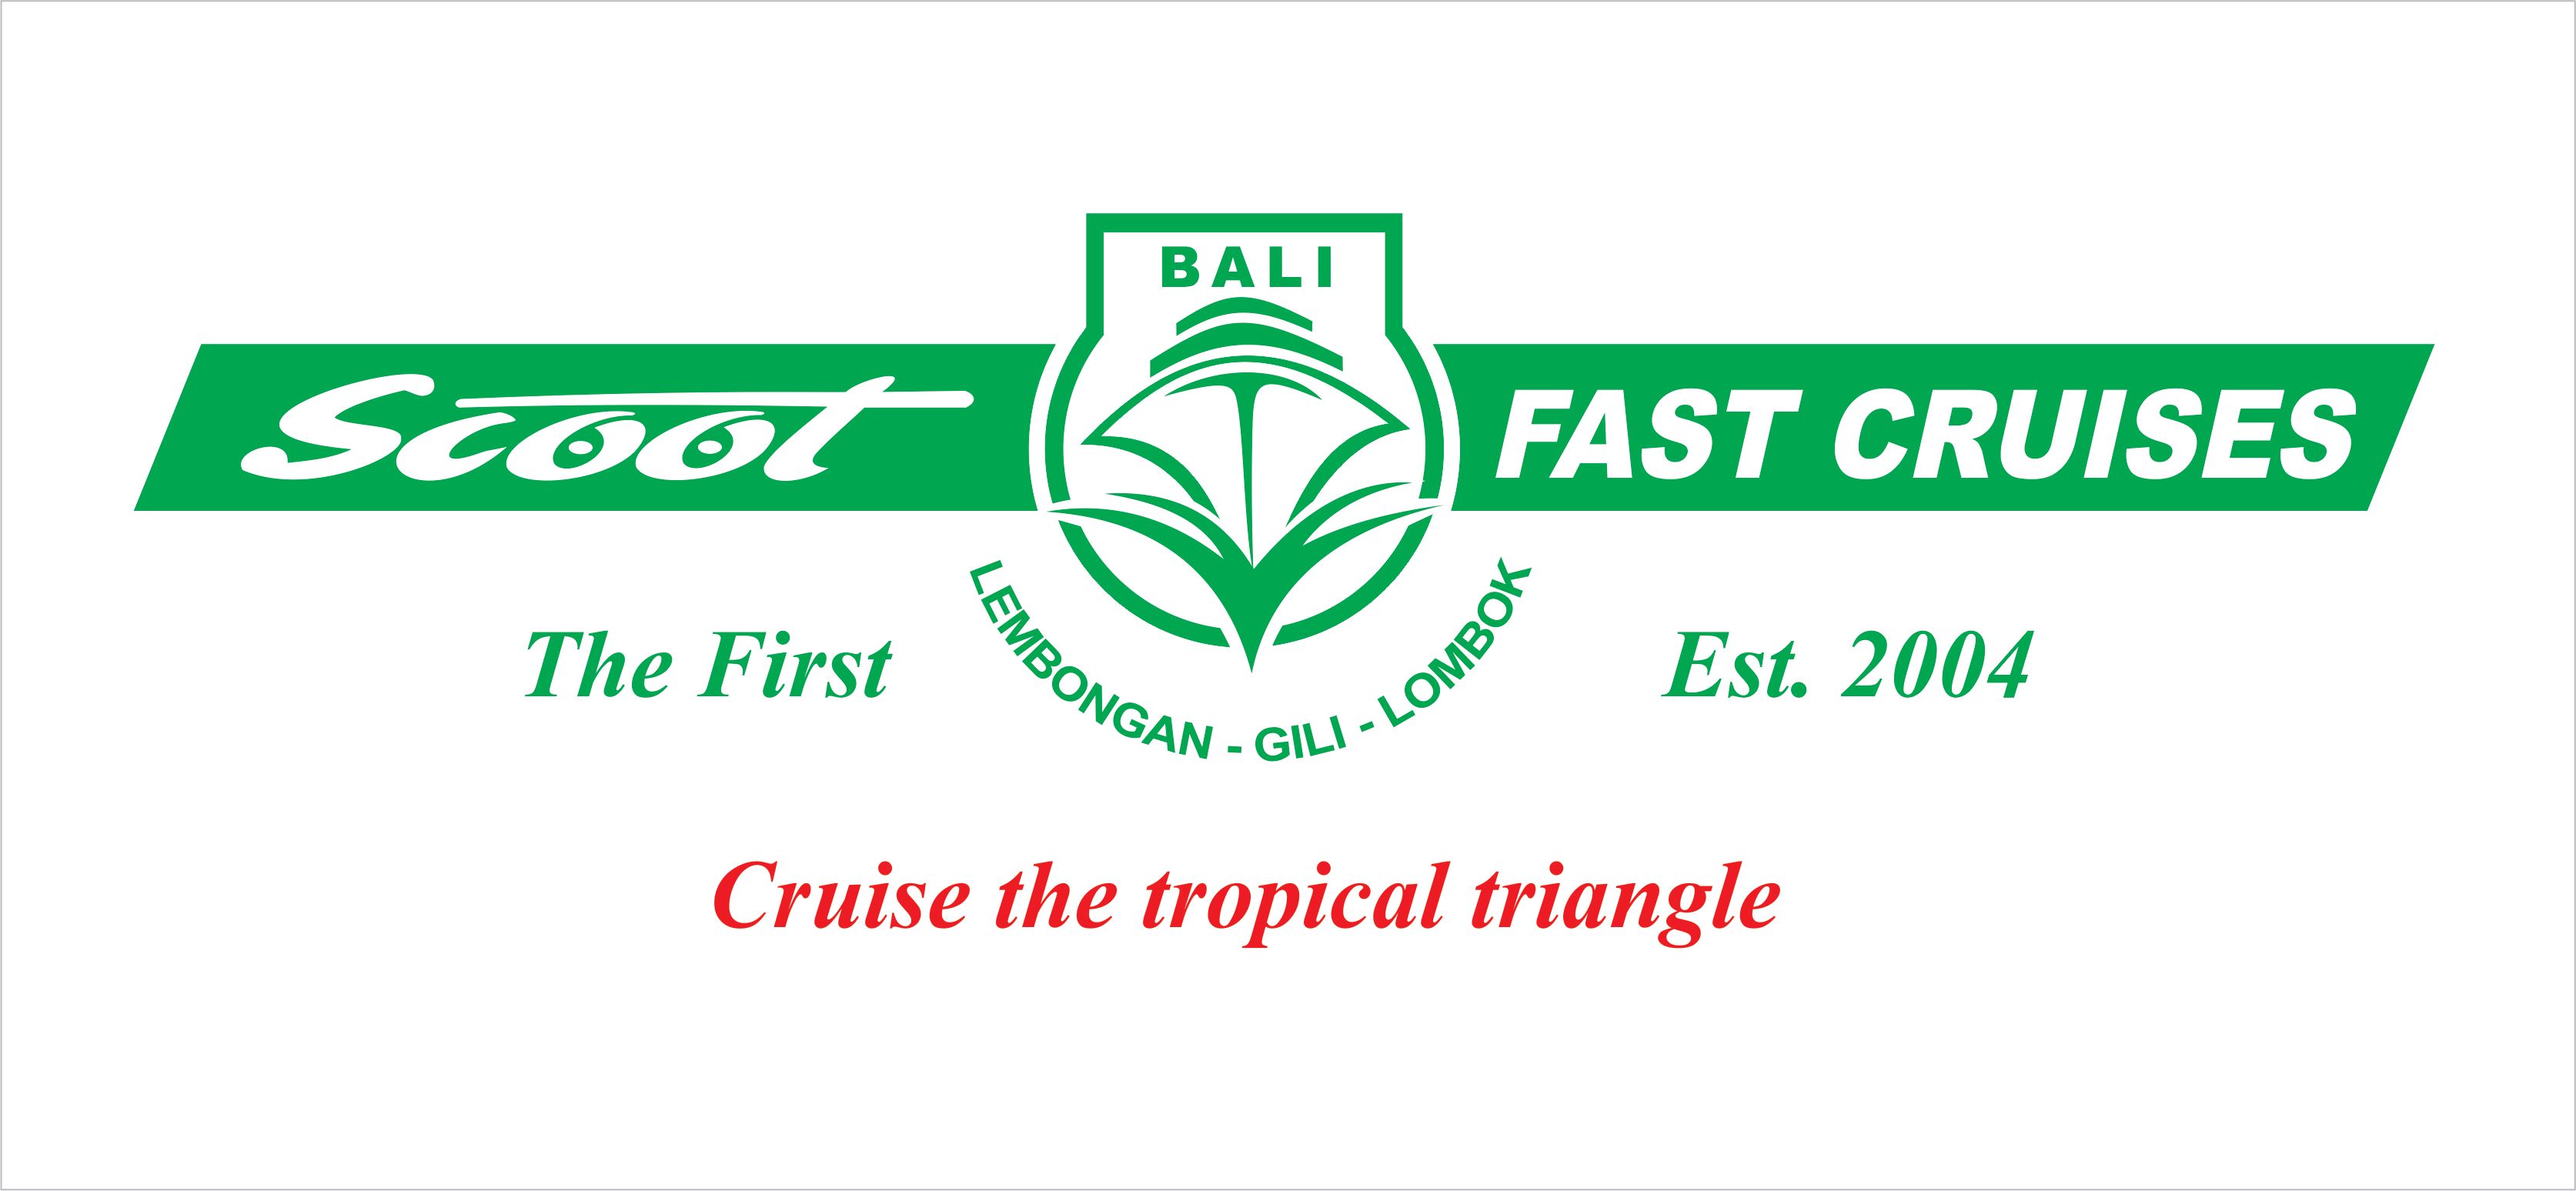 Scoot Fast cruises logo